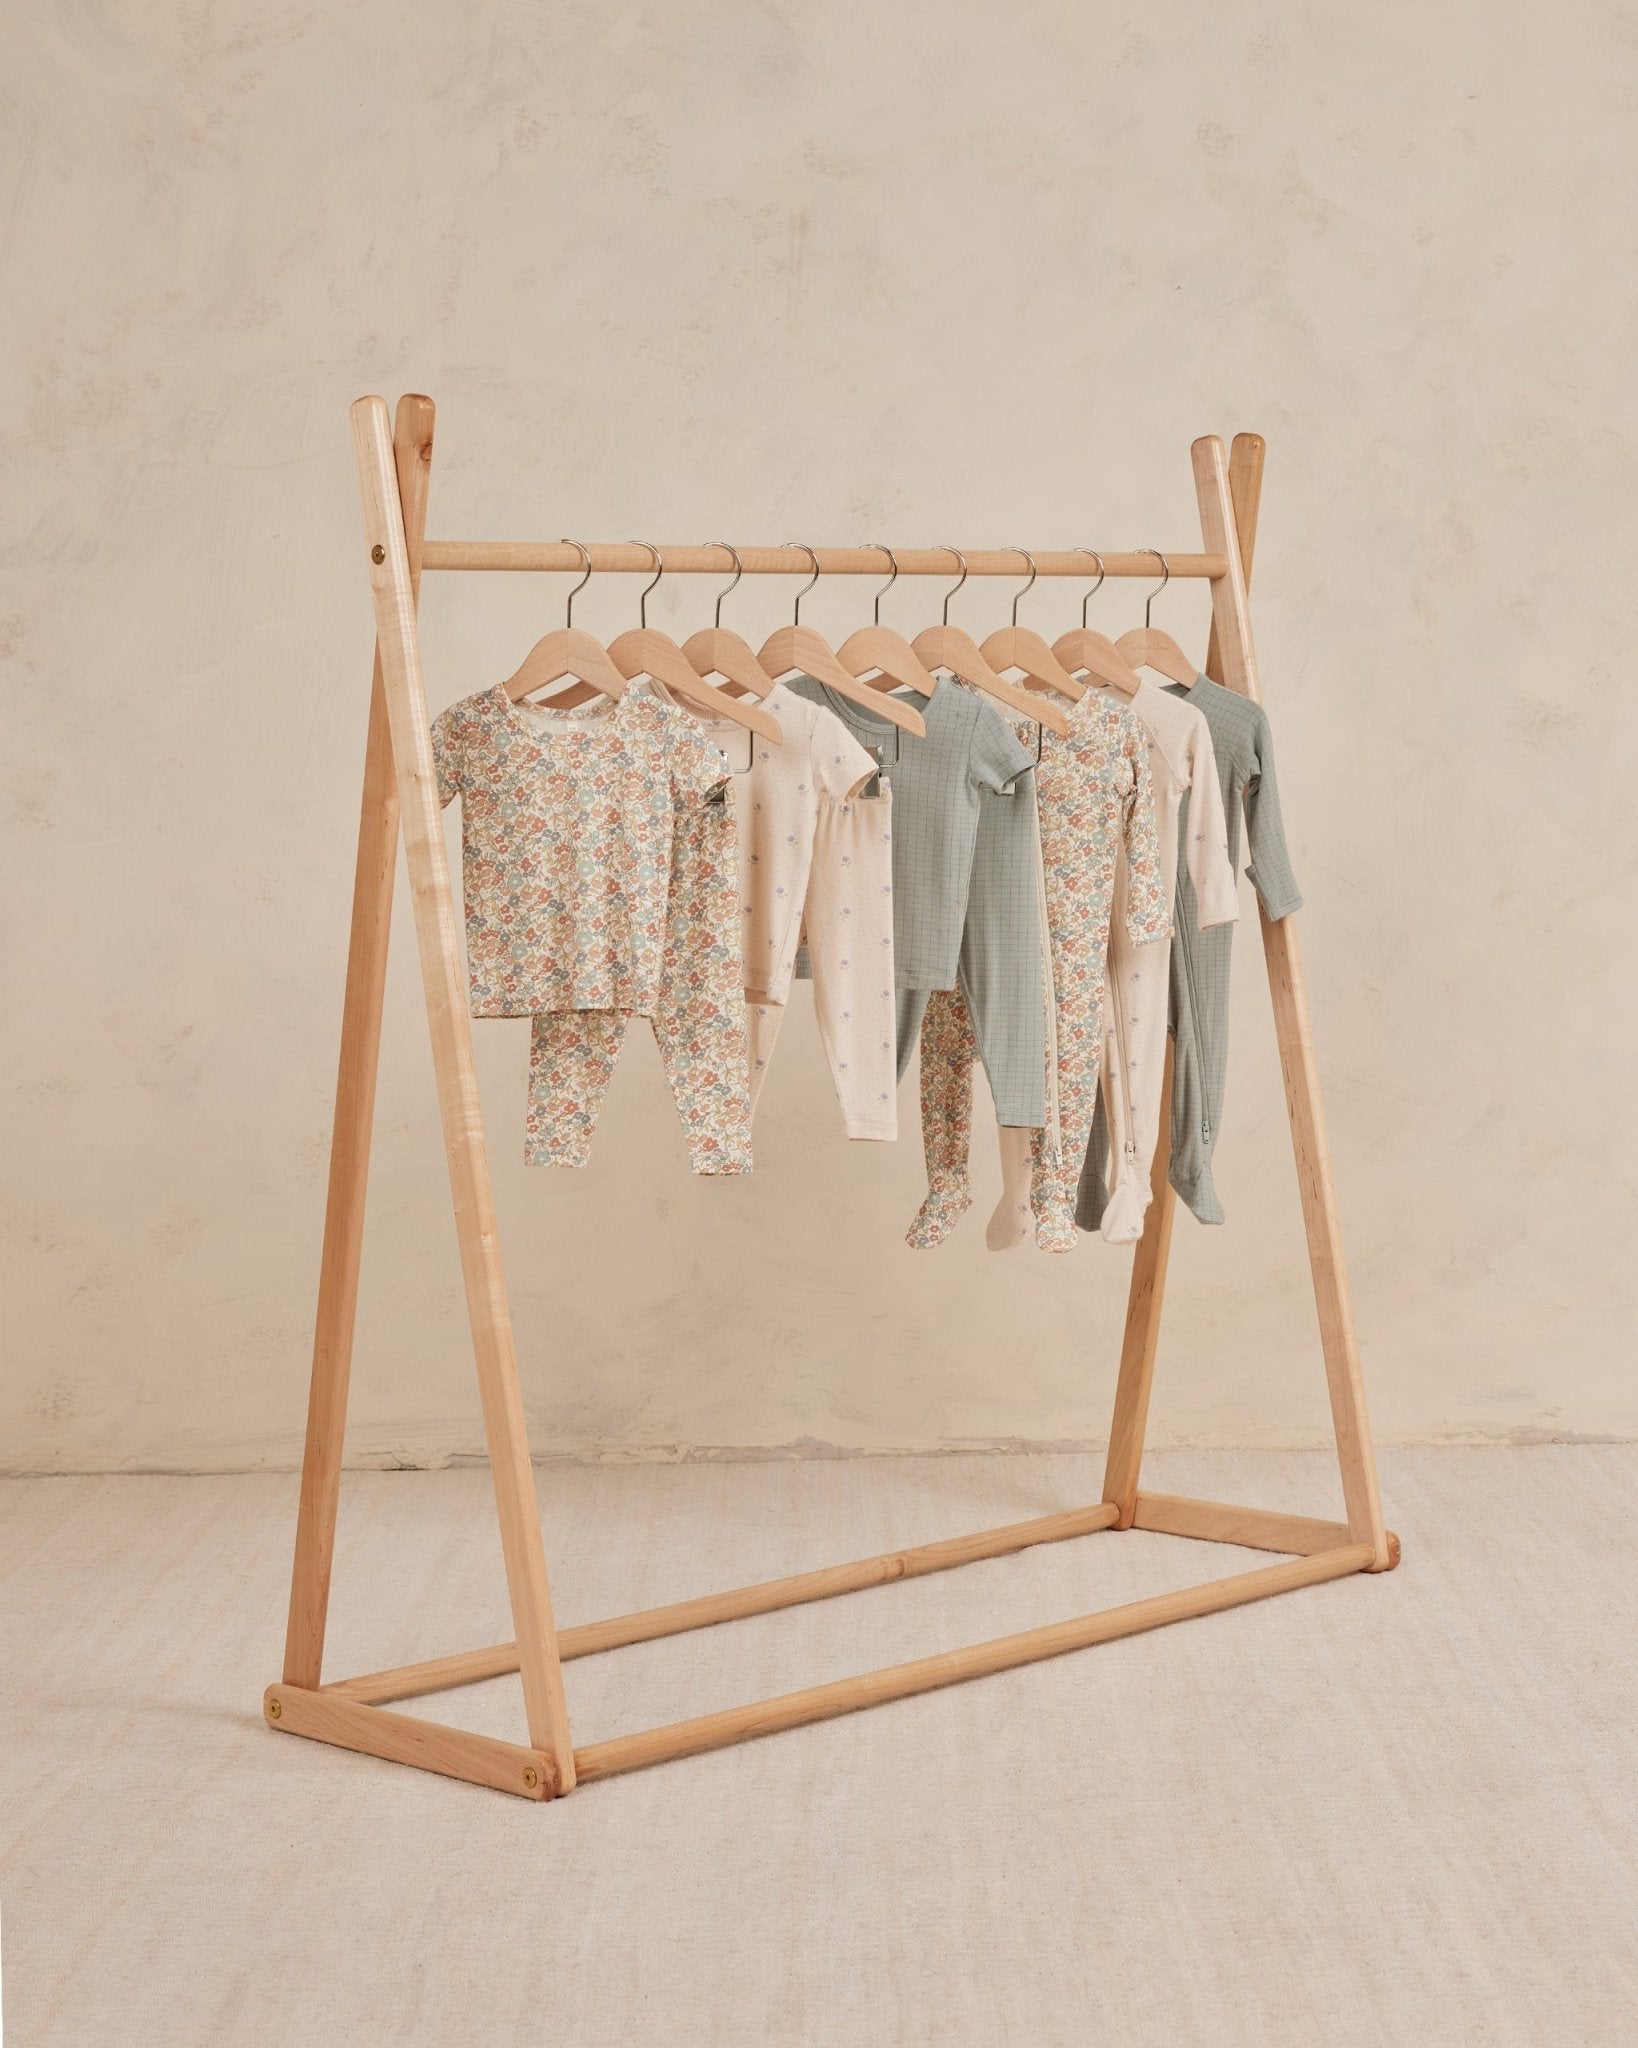 Bamboo Short Sleeve Pajama Set || Bloom* - Rylee + Cru Canada